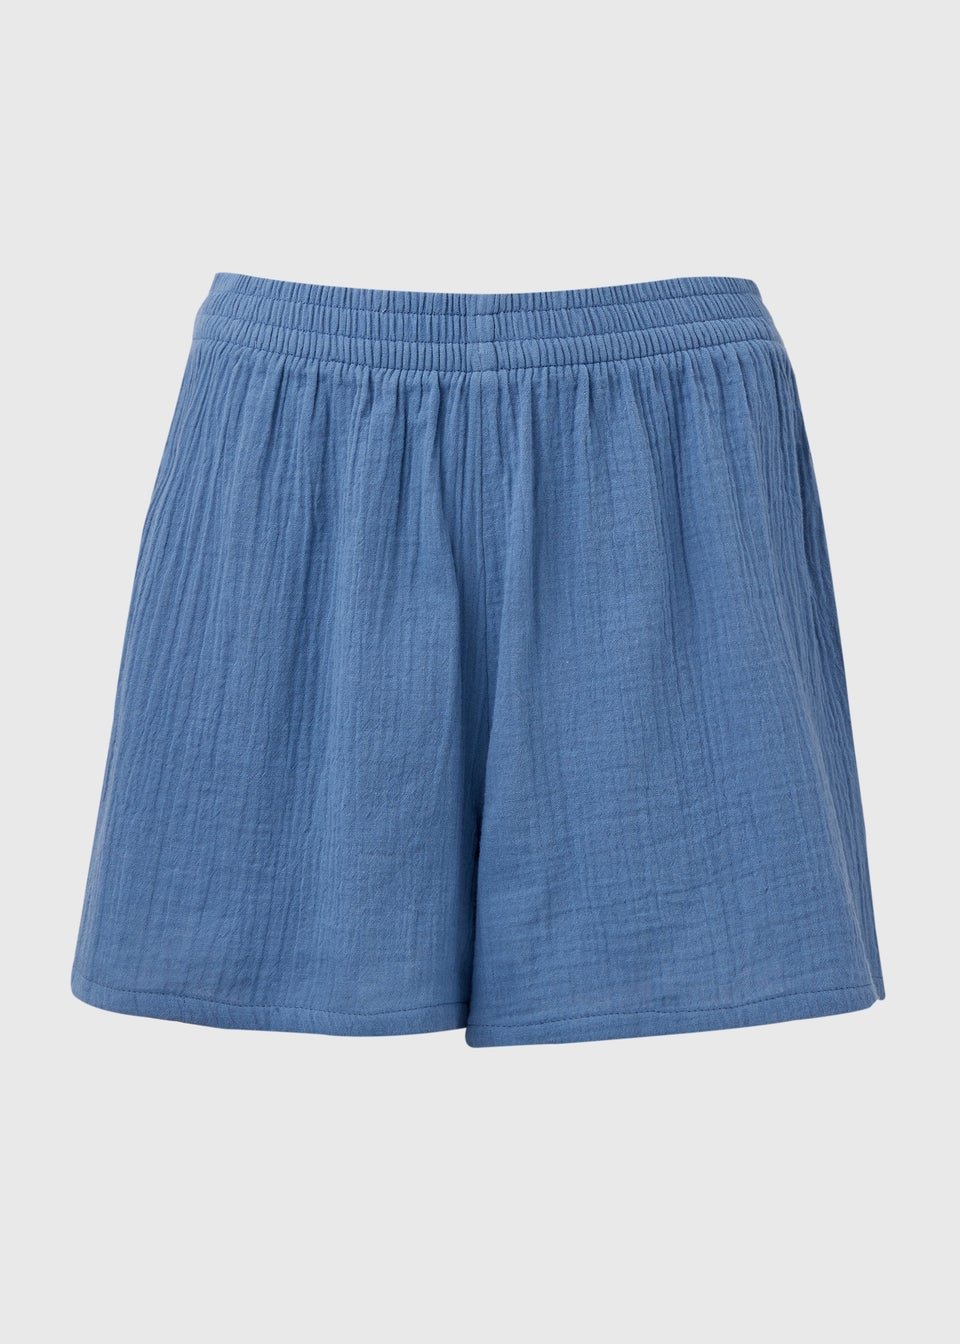 Blue Textured Cotton Shorts